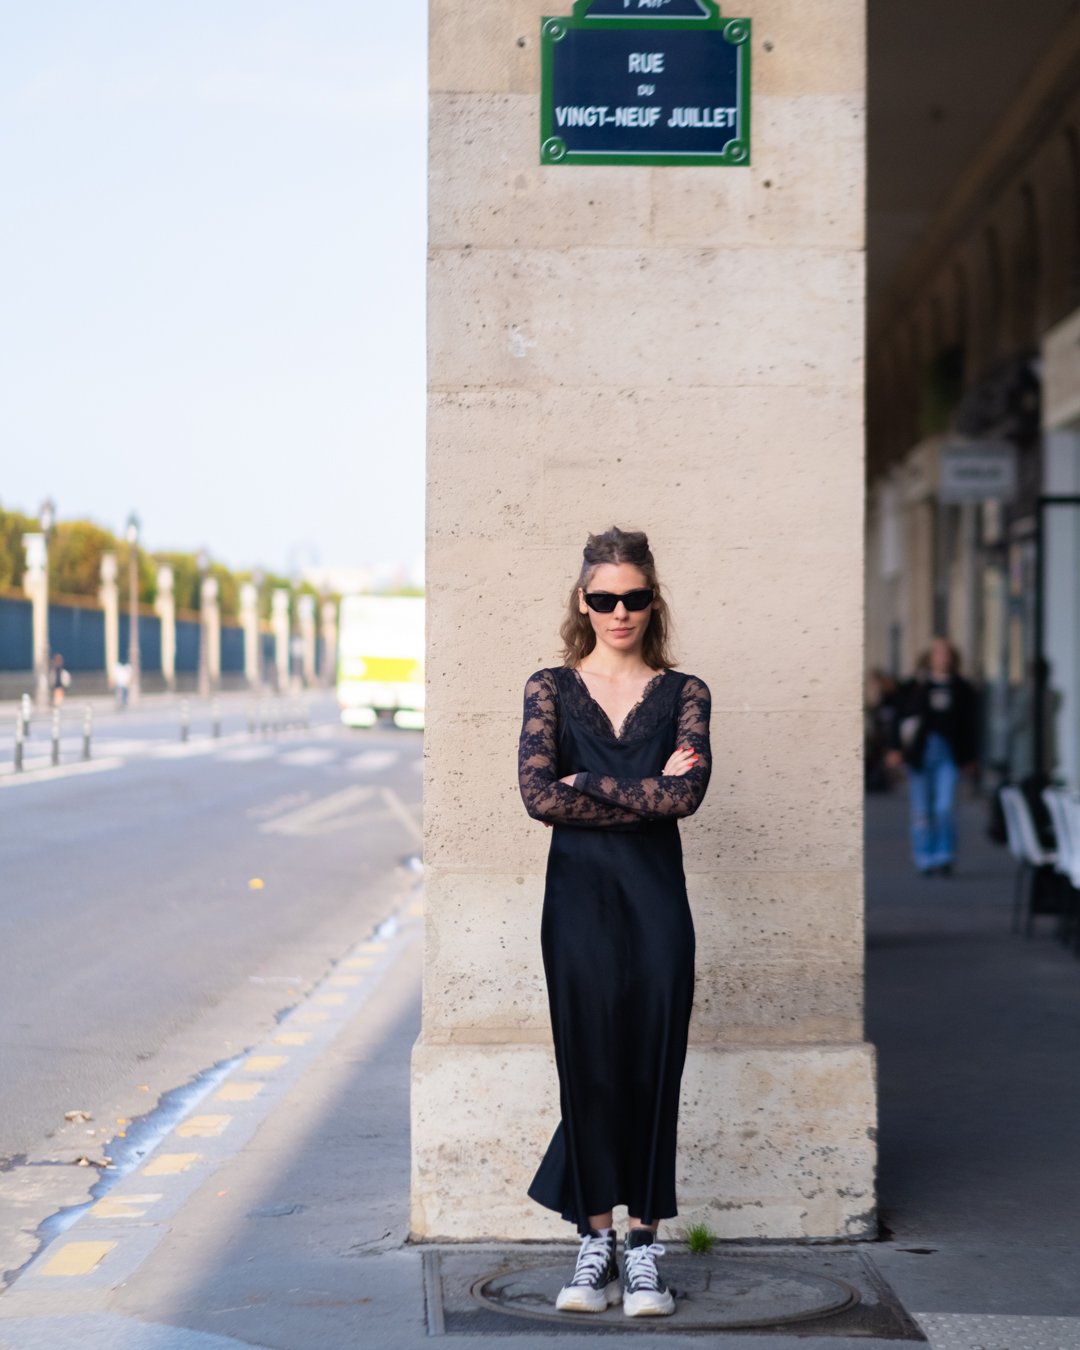 isabella aredes - slip dress e body de renda - slip dress body de renda sobreposição - primavera verão - paris fashion week - https://stealthelook.com.br